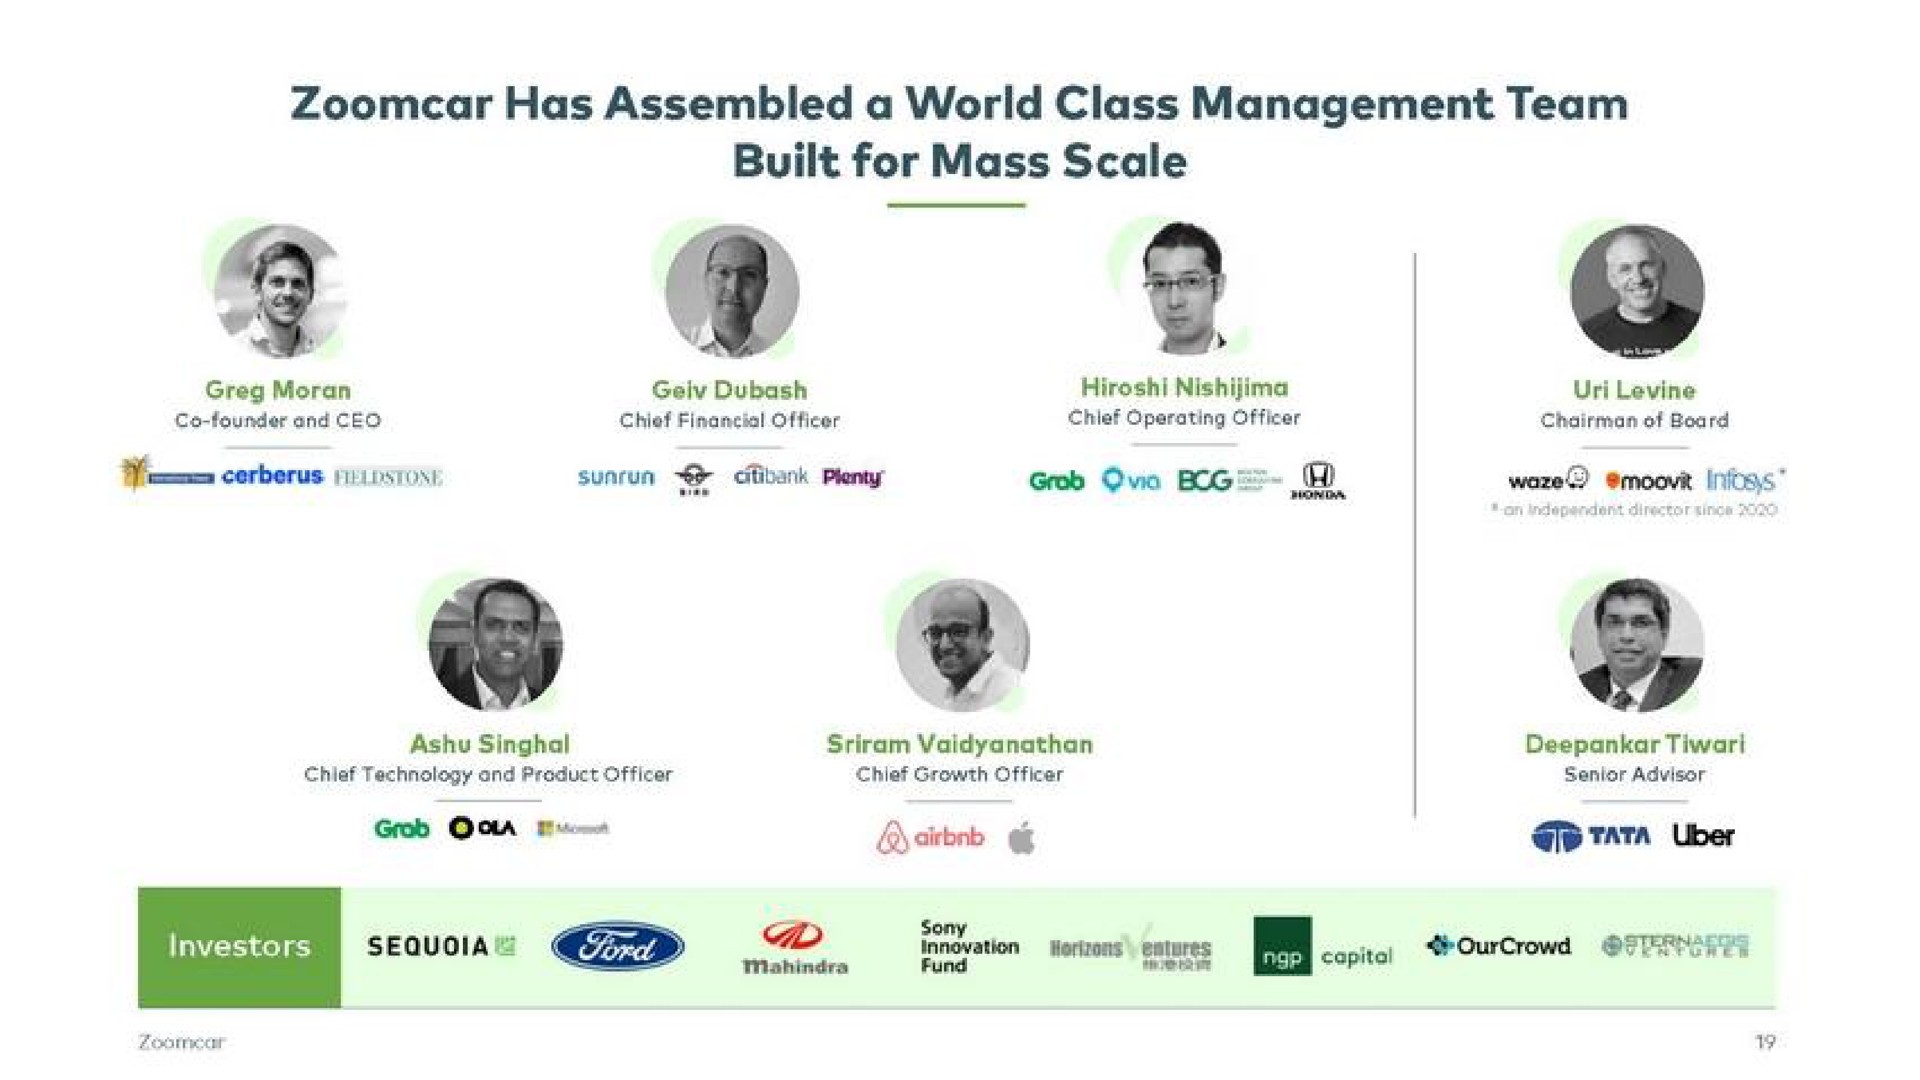 has assembled a world class management team built for mass scale | Zoomcar